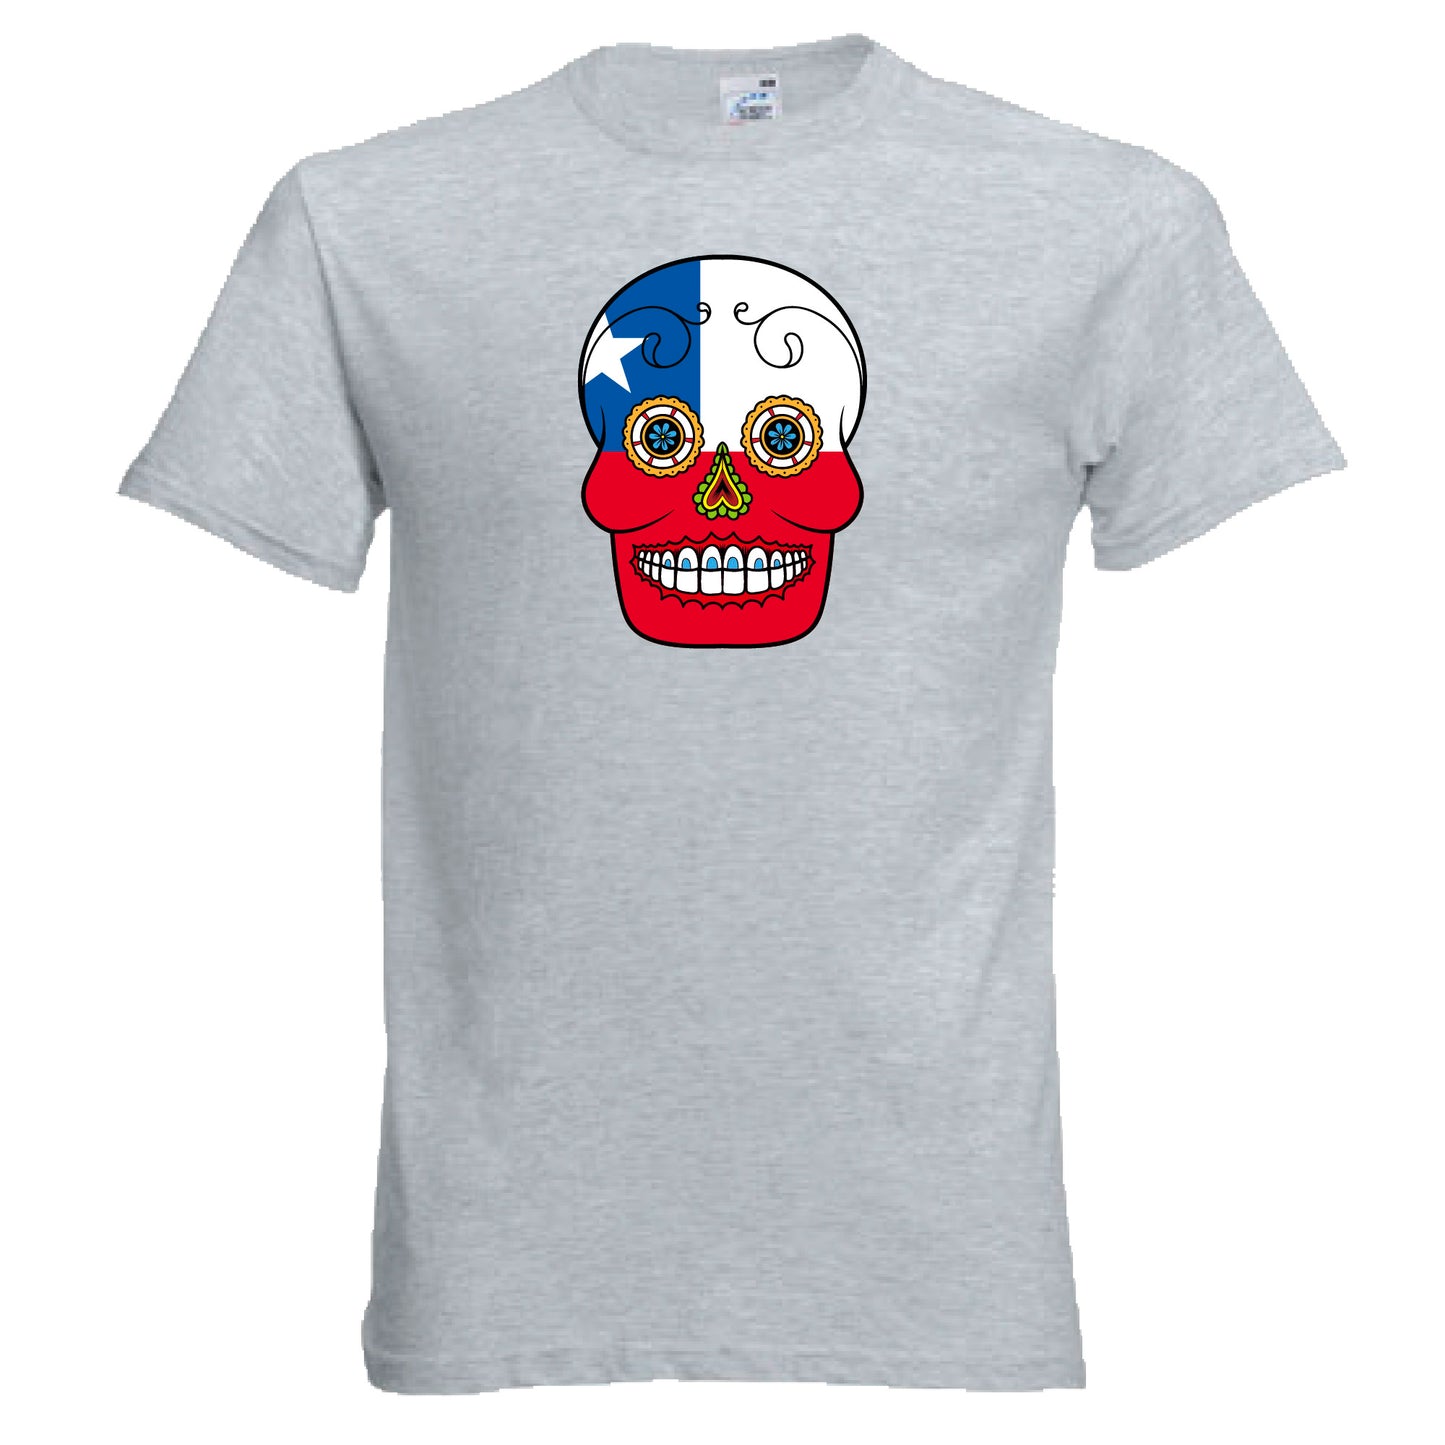 INDIGOS UG - T-Shirt Herren - Chile - Skull - Fussball